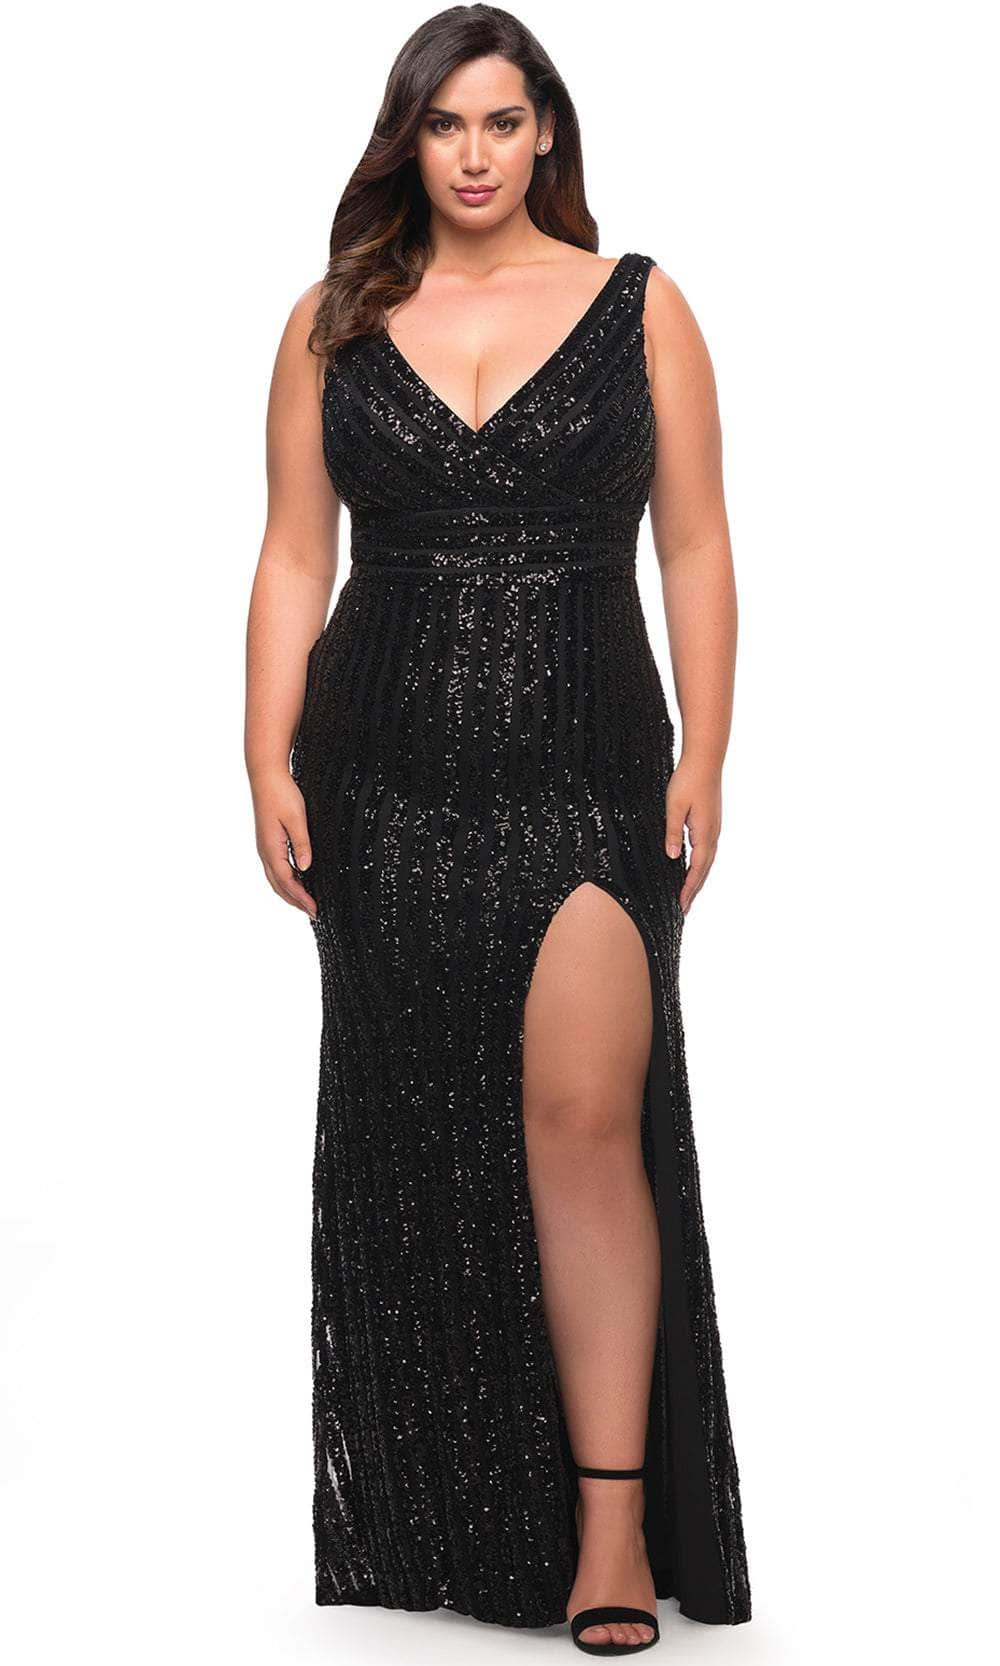 La Femme 30182 - Sequin Sleeveless Sheath Dress Special Occasion Dress 12W / Black